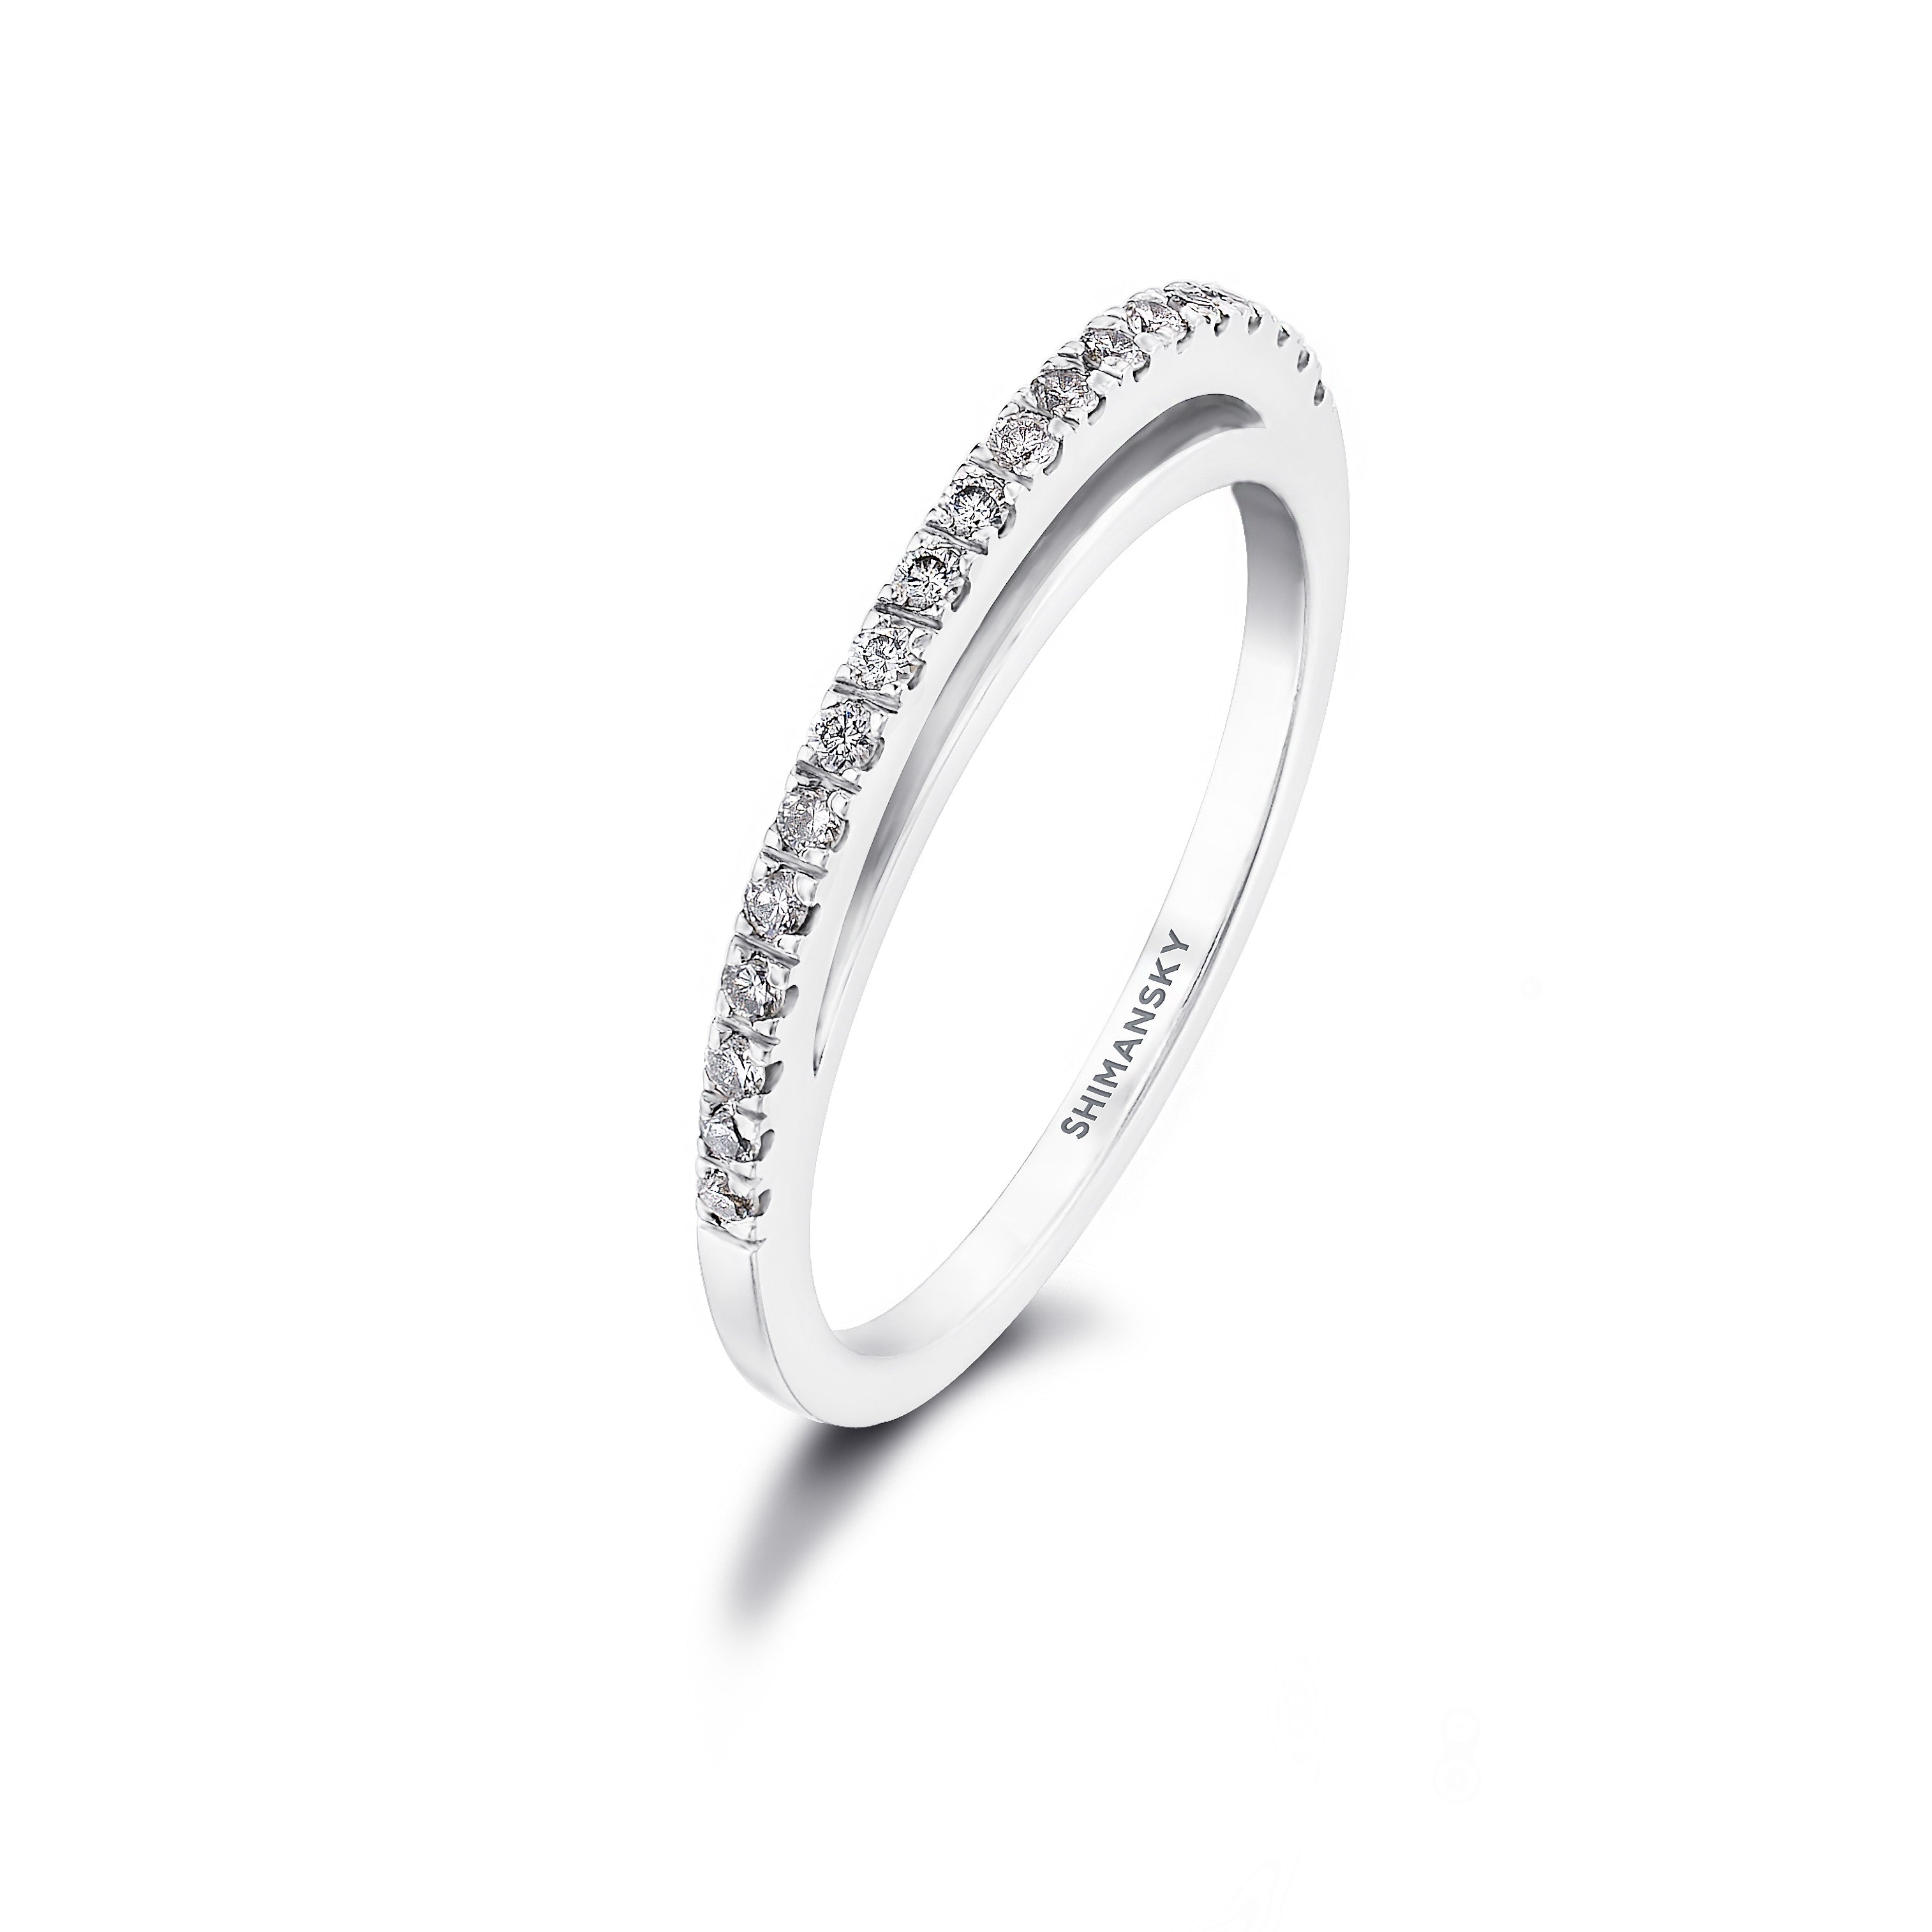 Shimansky - Evolym Microset Diamond Wedding Band 0.13ct crafted in 18K White Gold